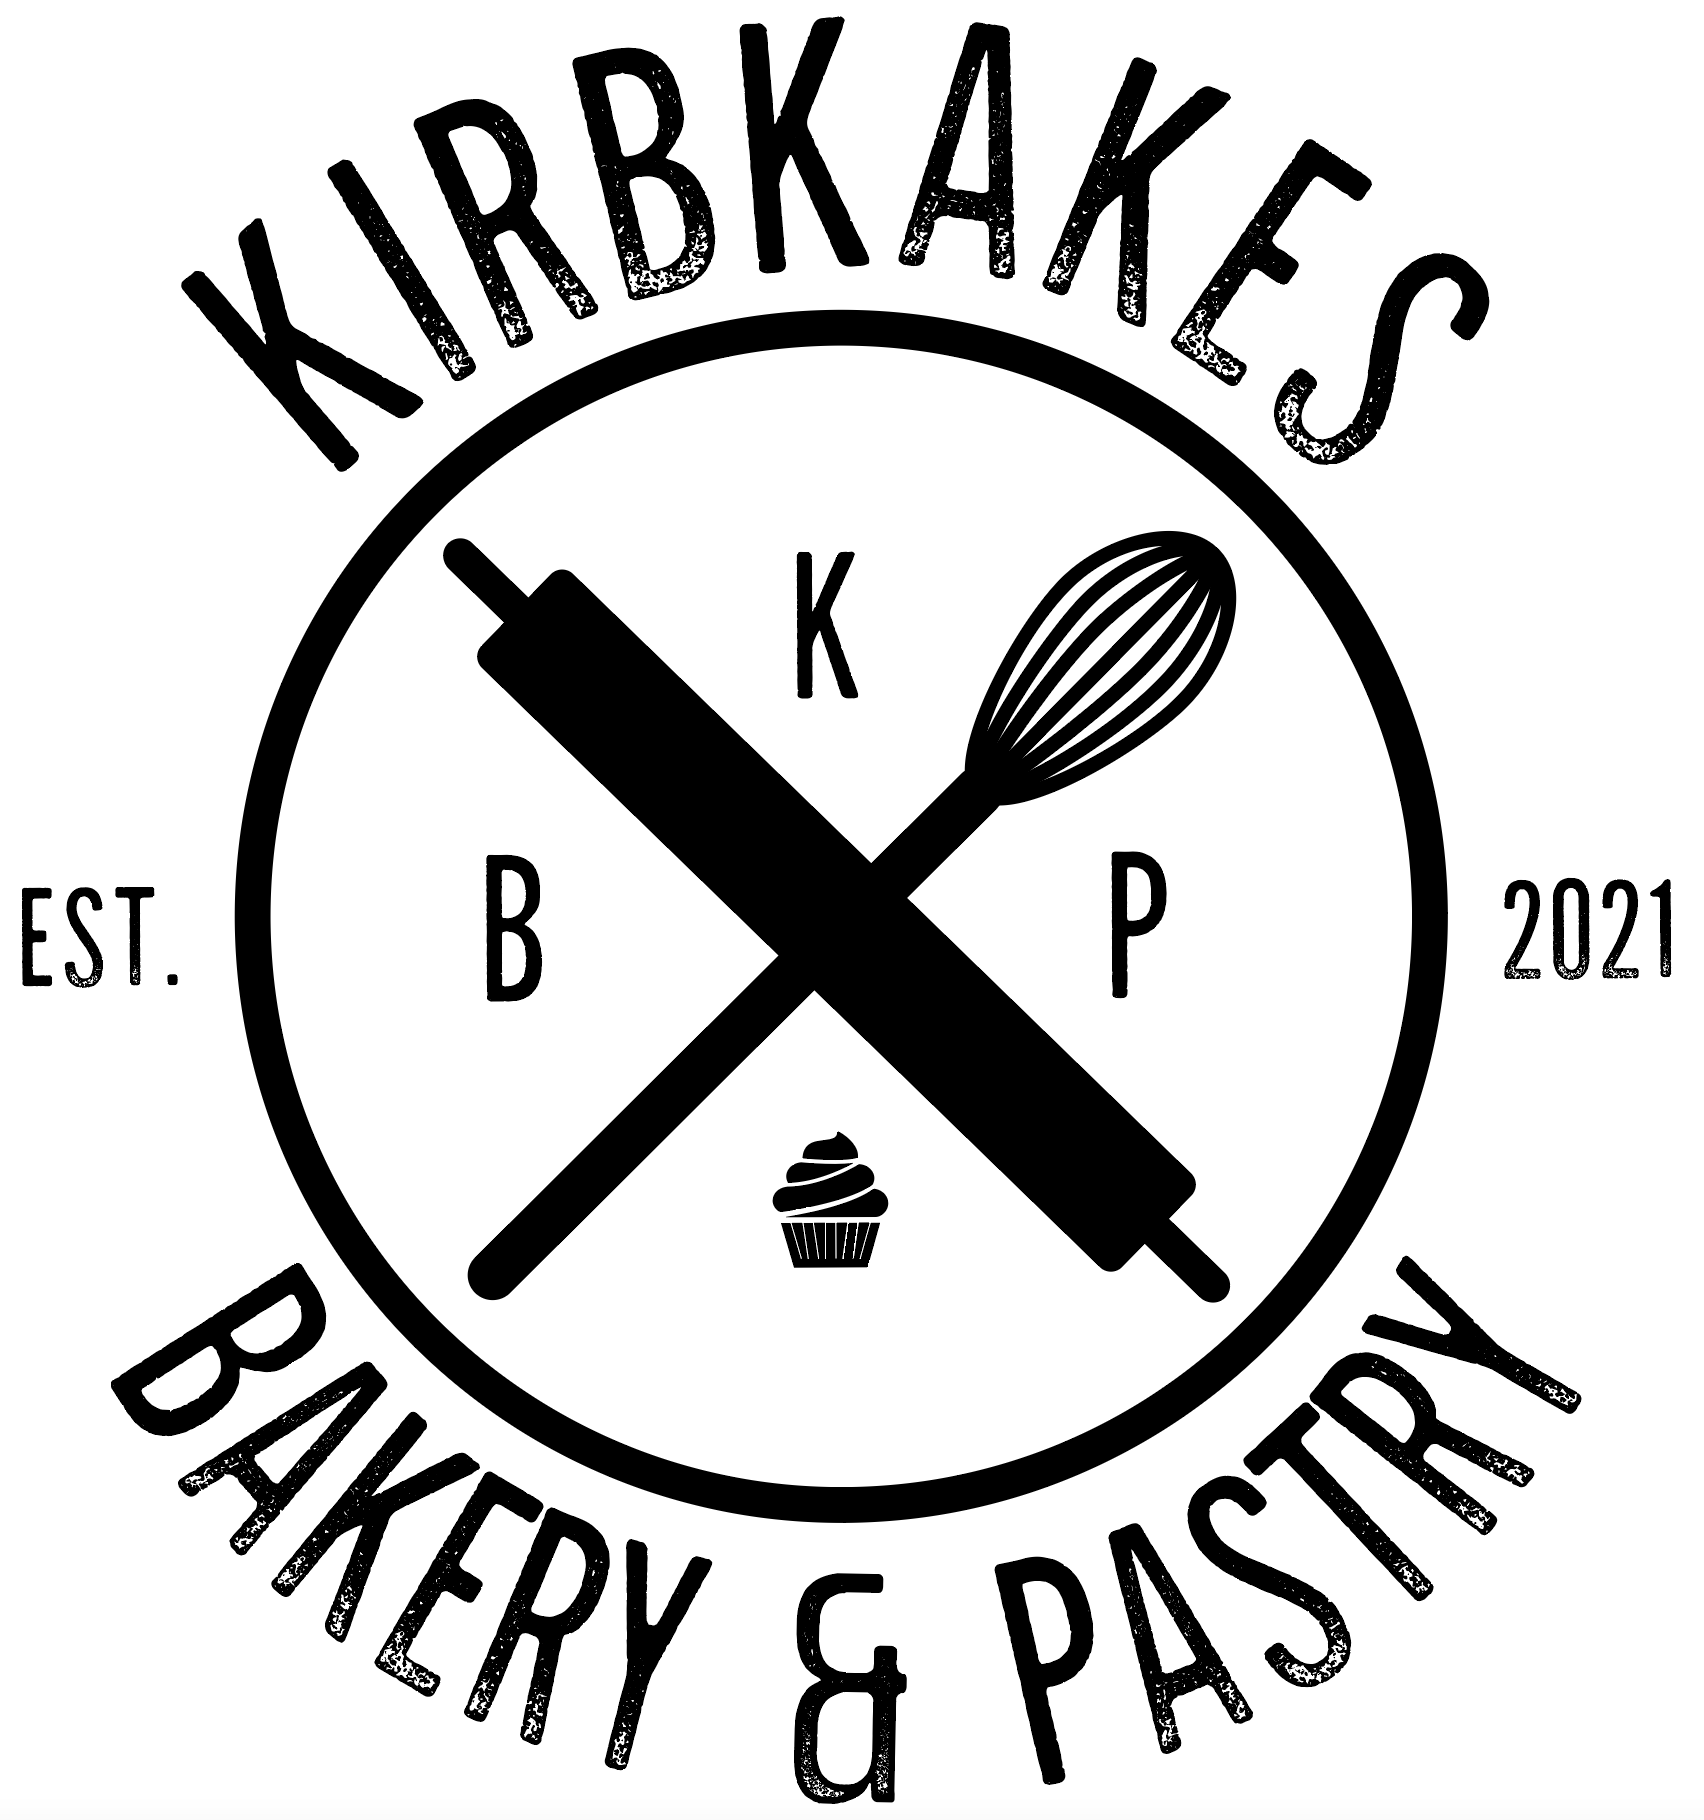 KirbKakes Bakery & Pastry